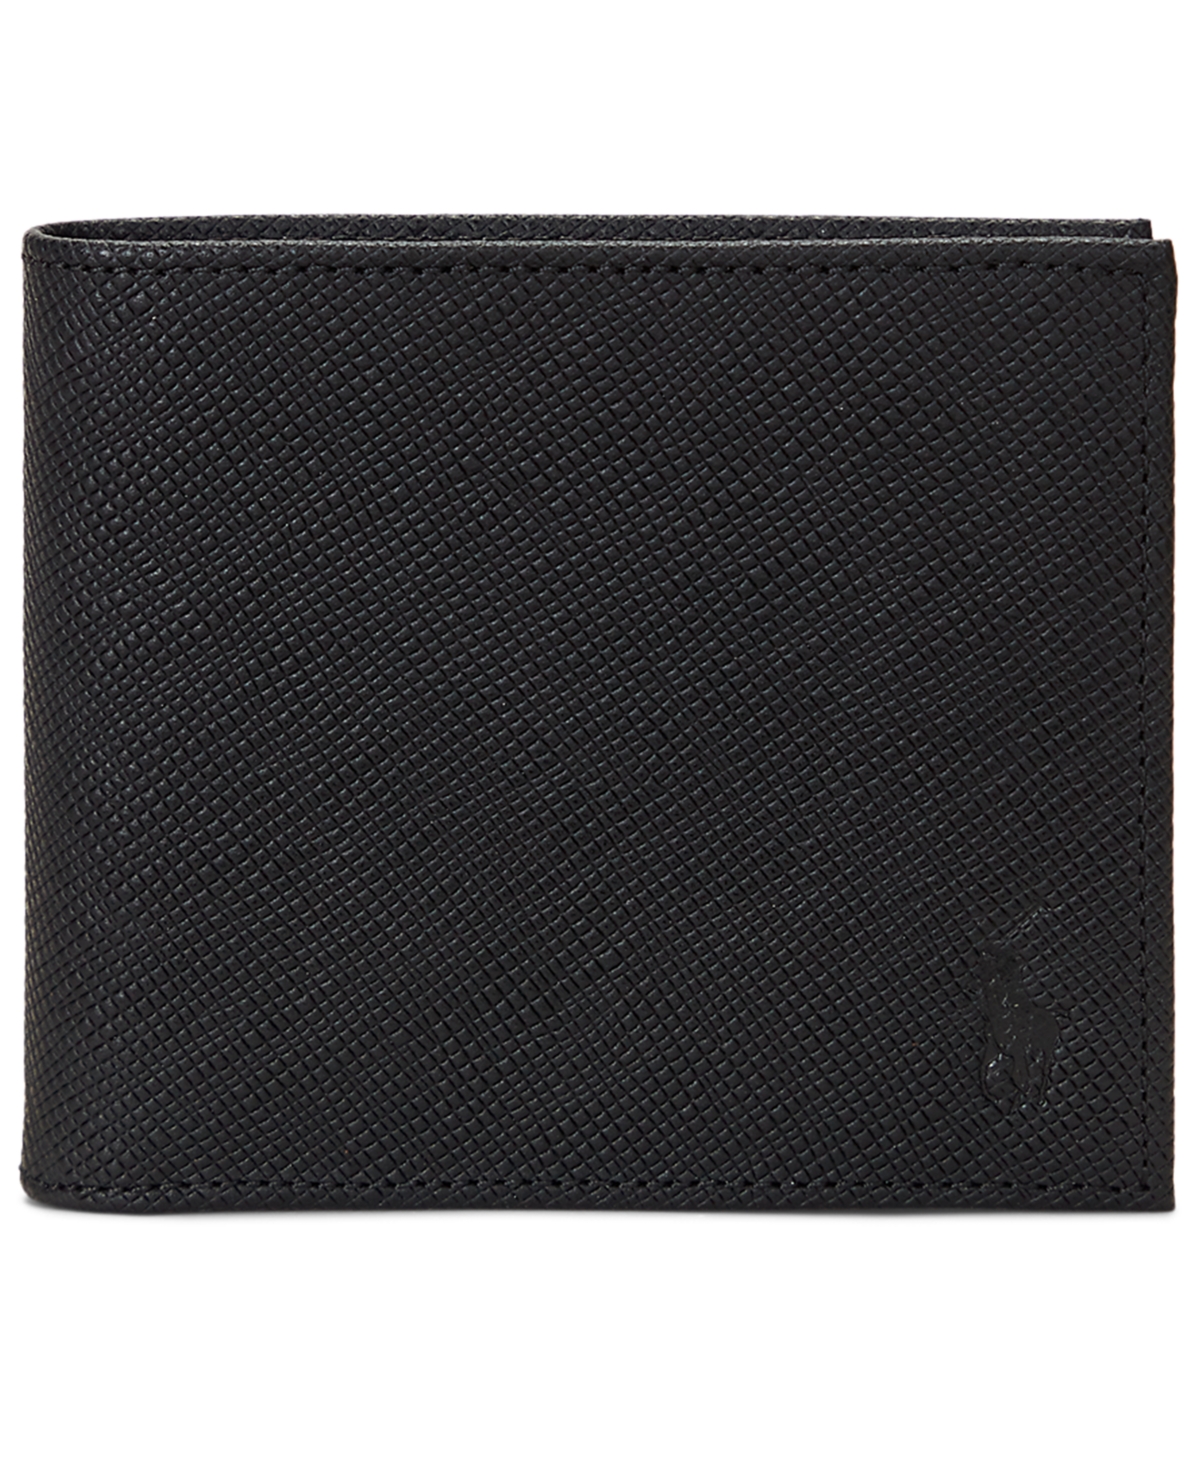 Men's Textured Saffiano Leather Billfold Wallet - Black